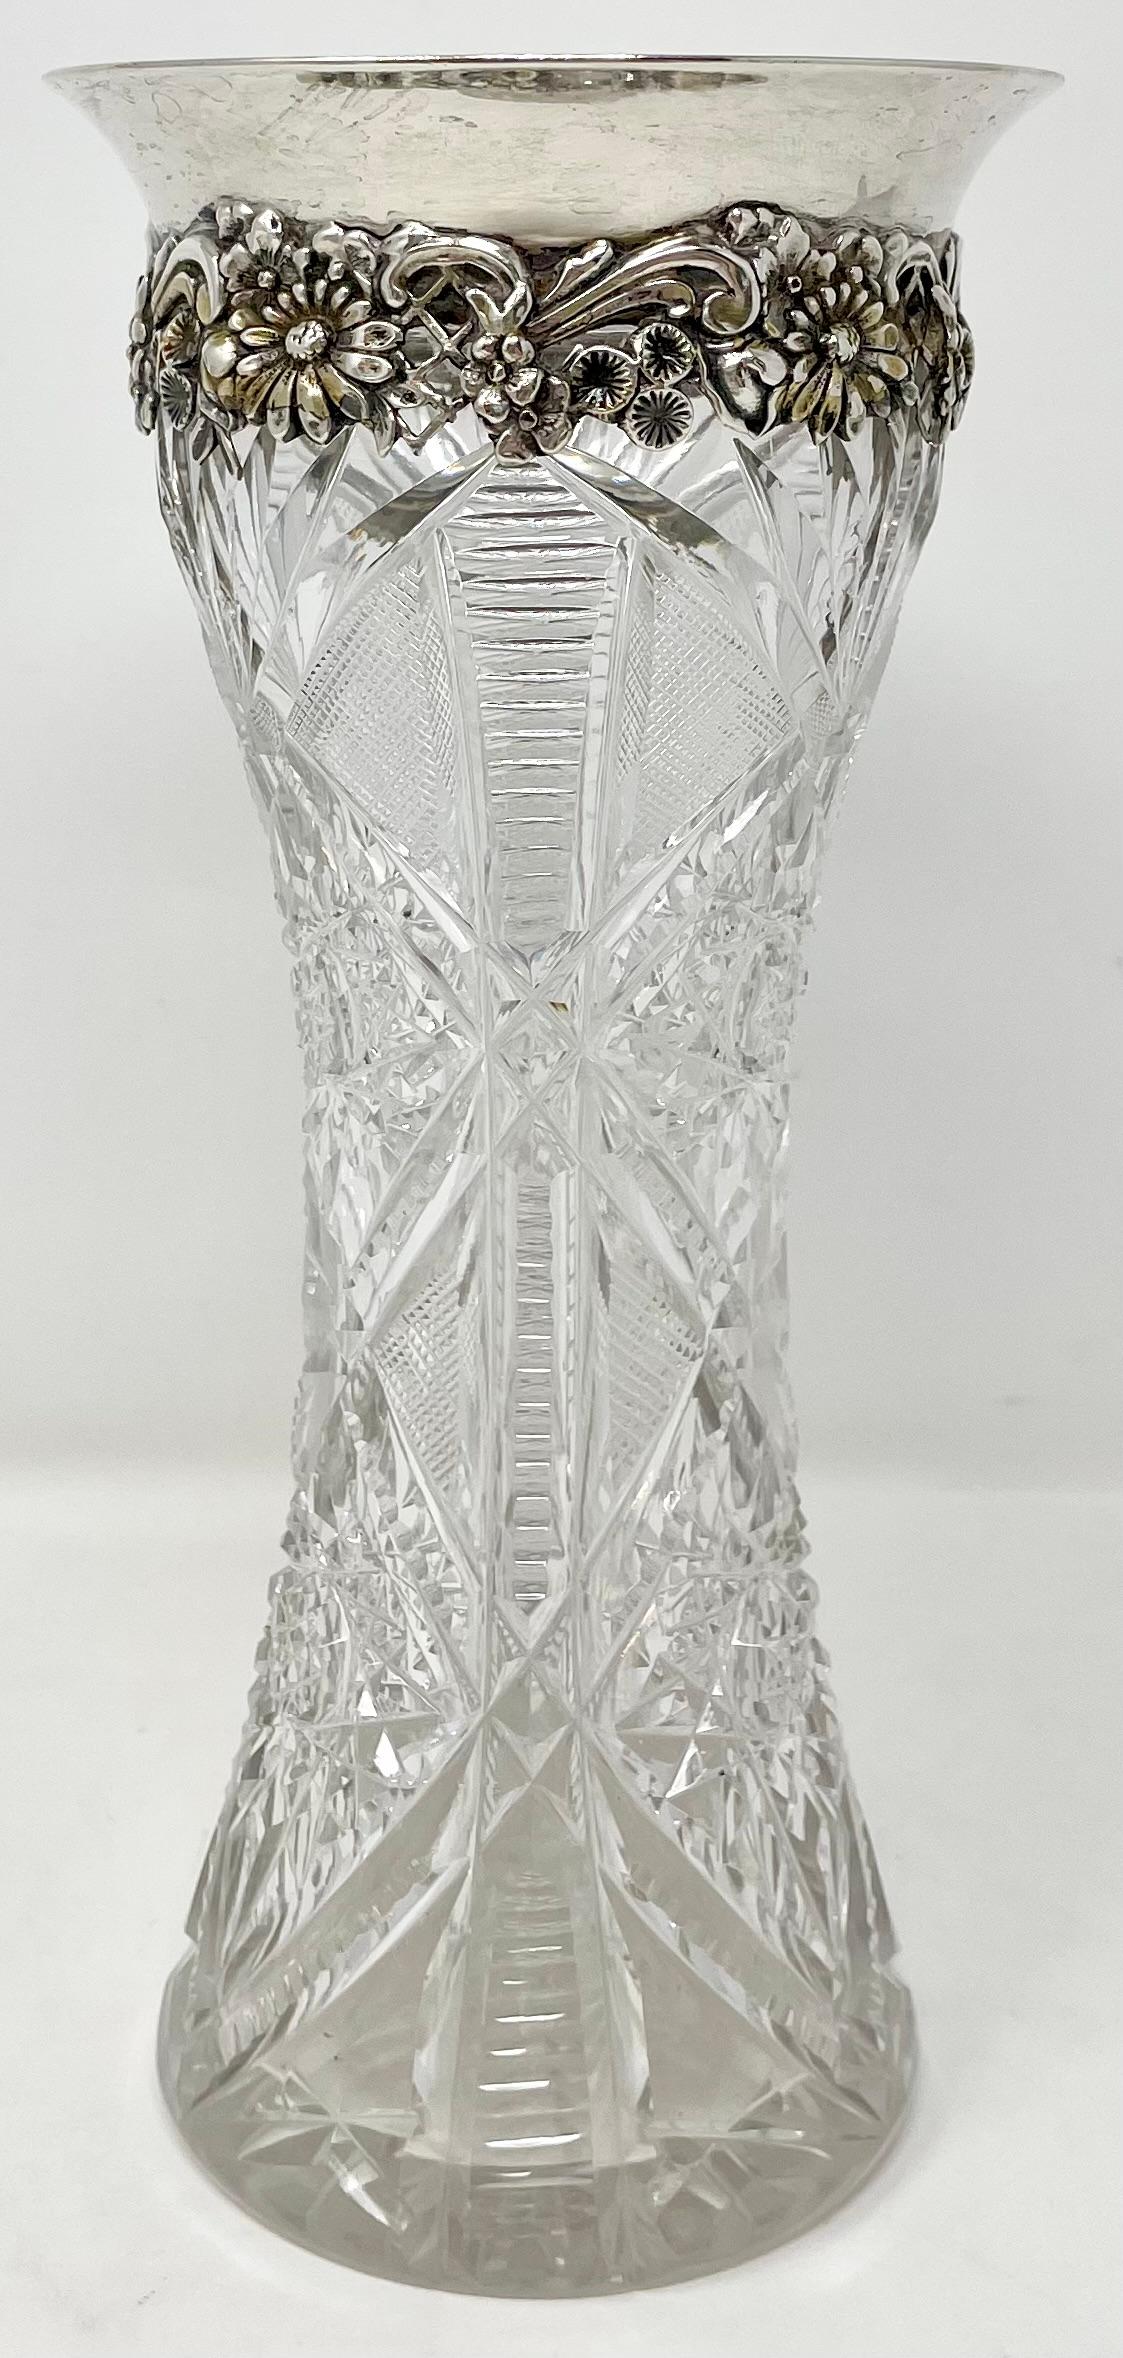 Antique American sterling silver & cut crystal bud vase, circa 1870-1880.